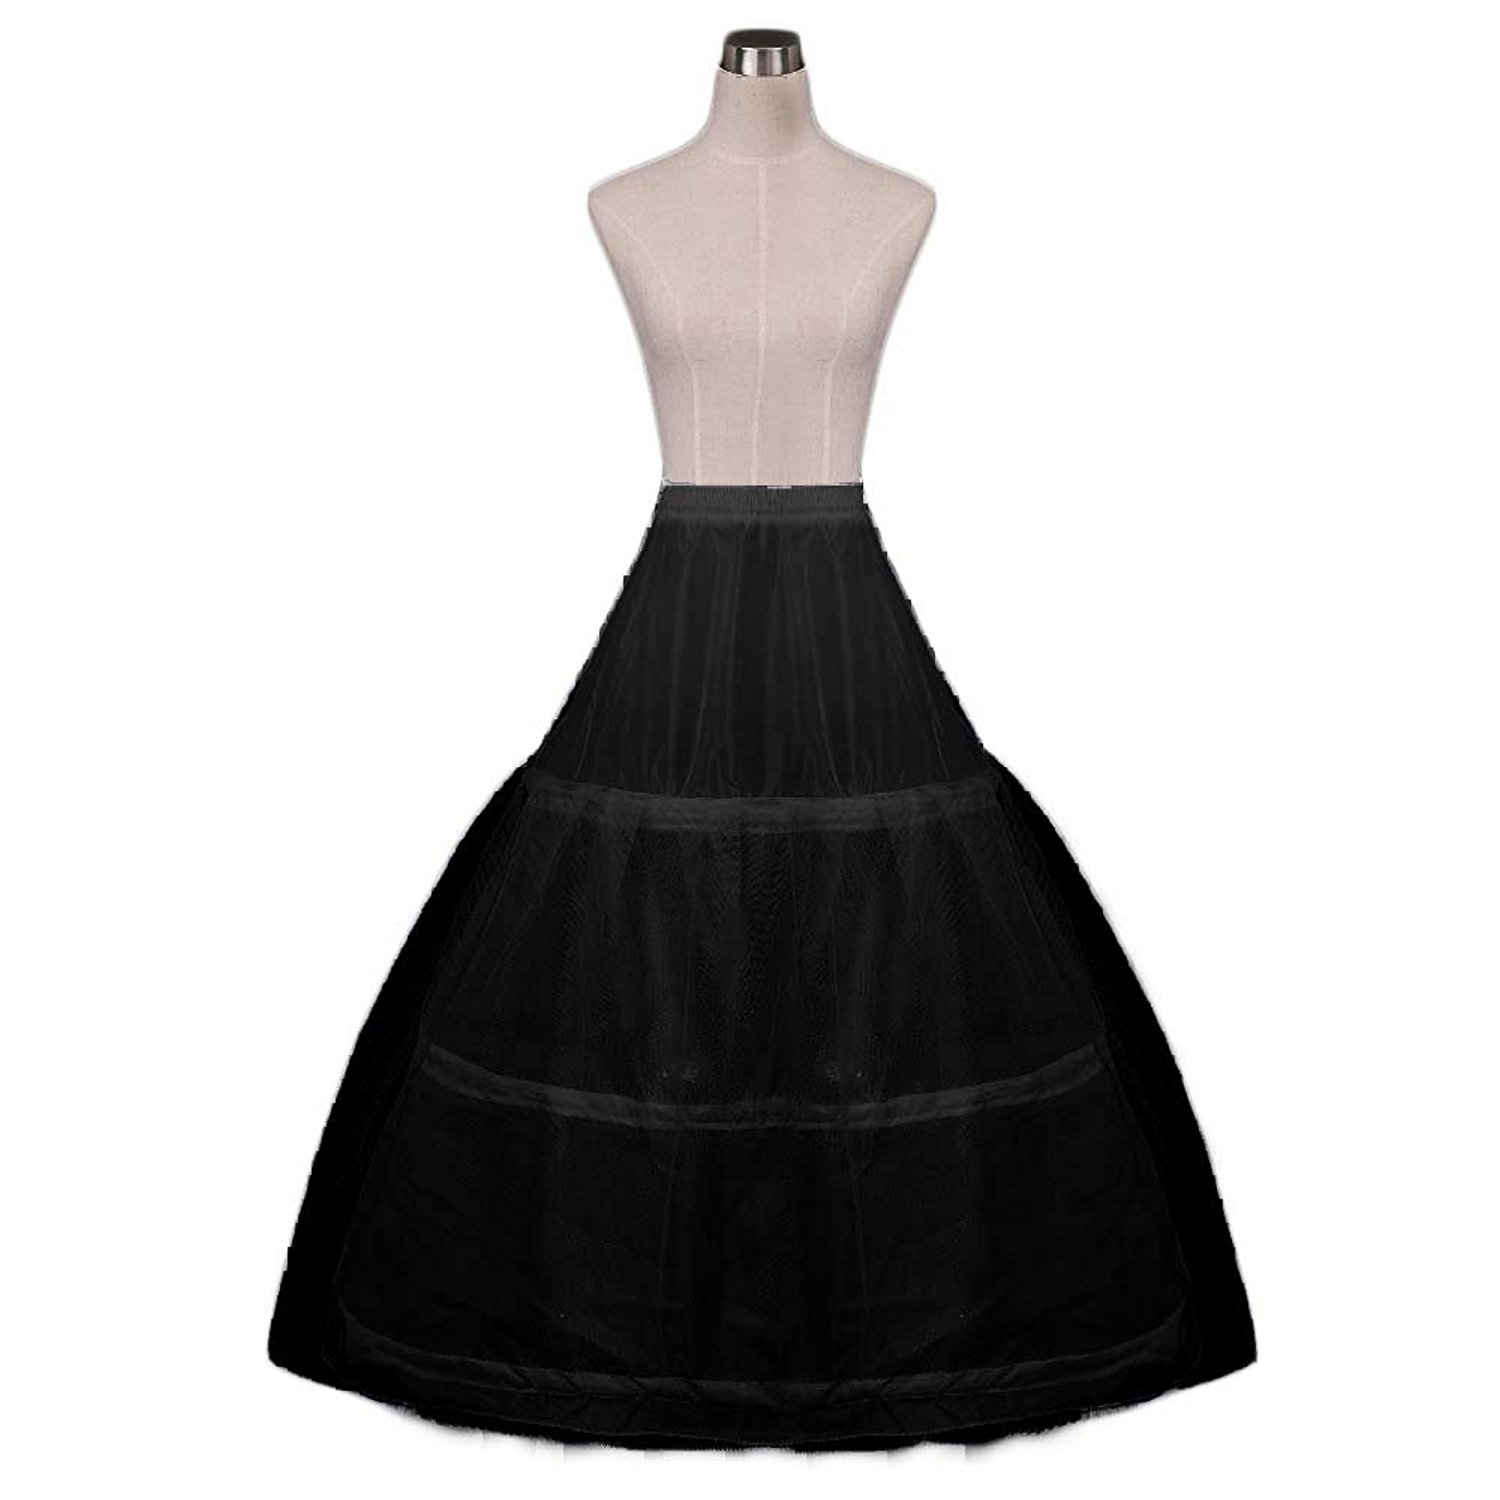 Plus size In Stock Hot Sale 3 Hoop Ball Gown Bone Full Crinoline Petticoats For Wedding Dress Wedding Skirt Accessories Slip